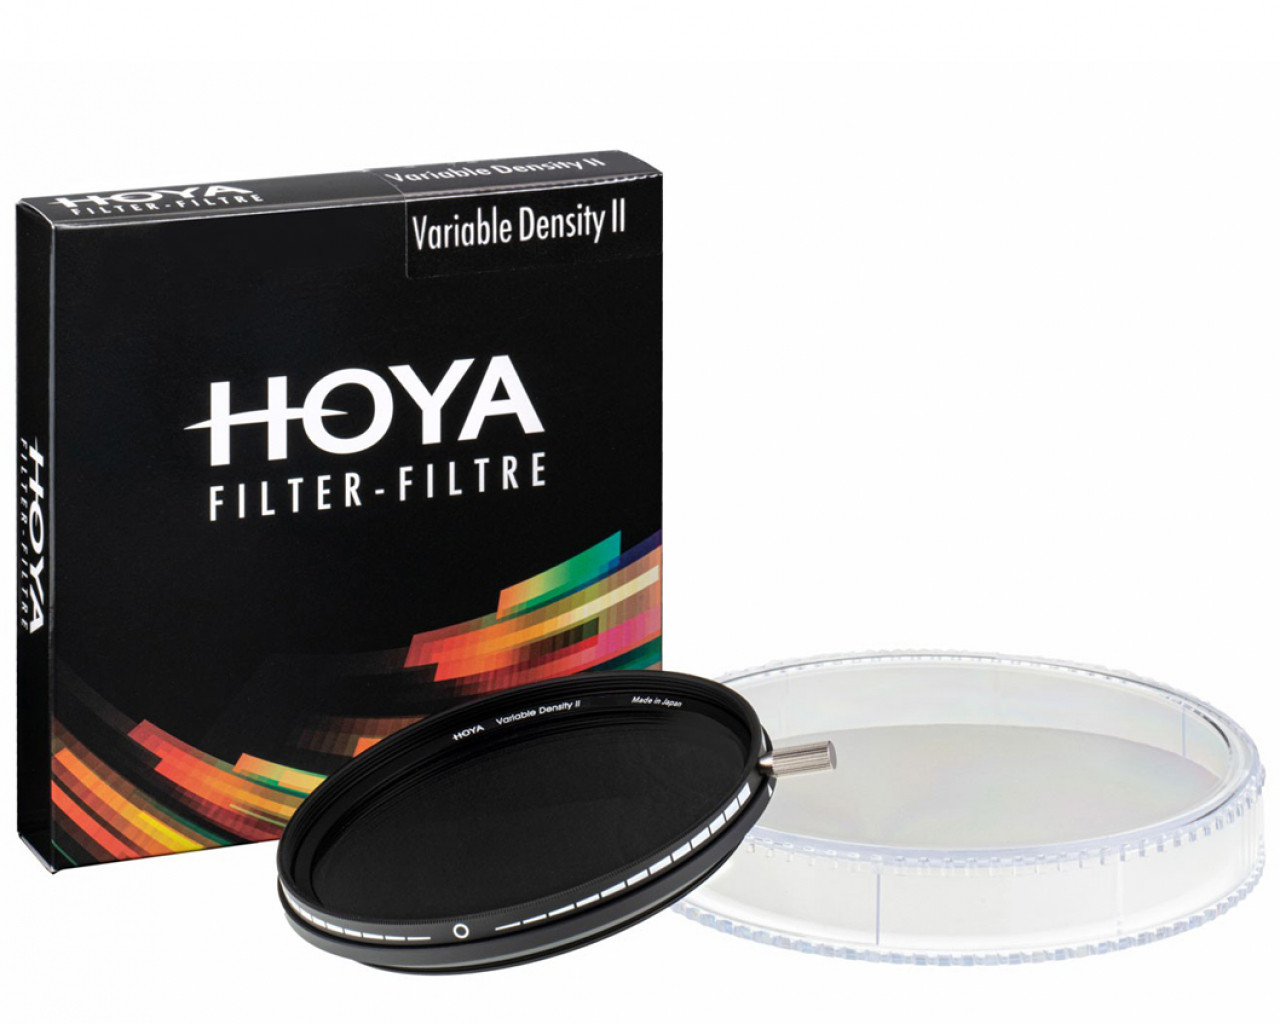 Hoya Filtro Vario-ND II 72mm